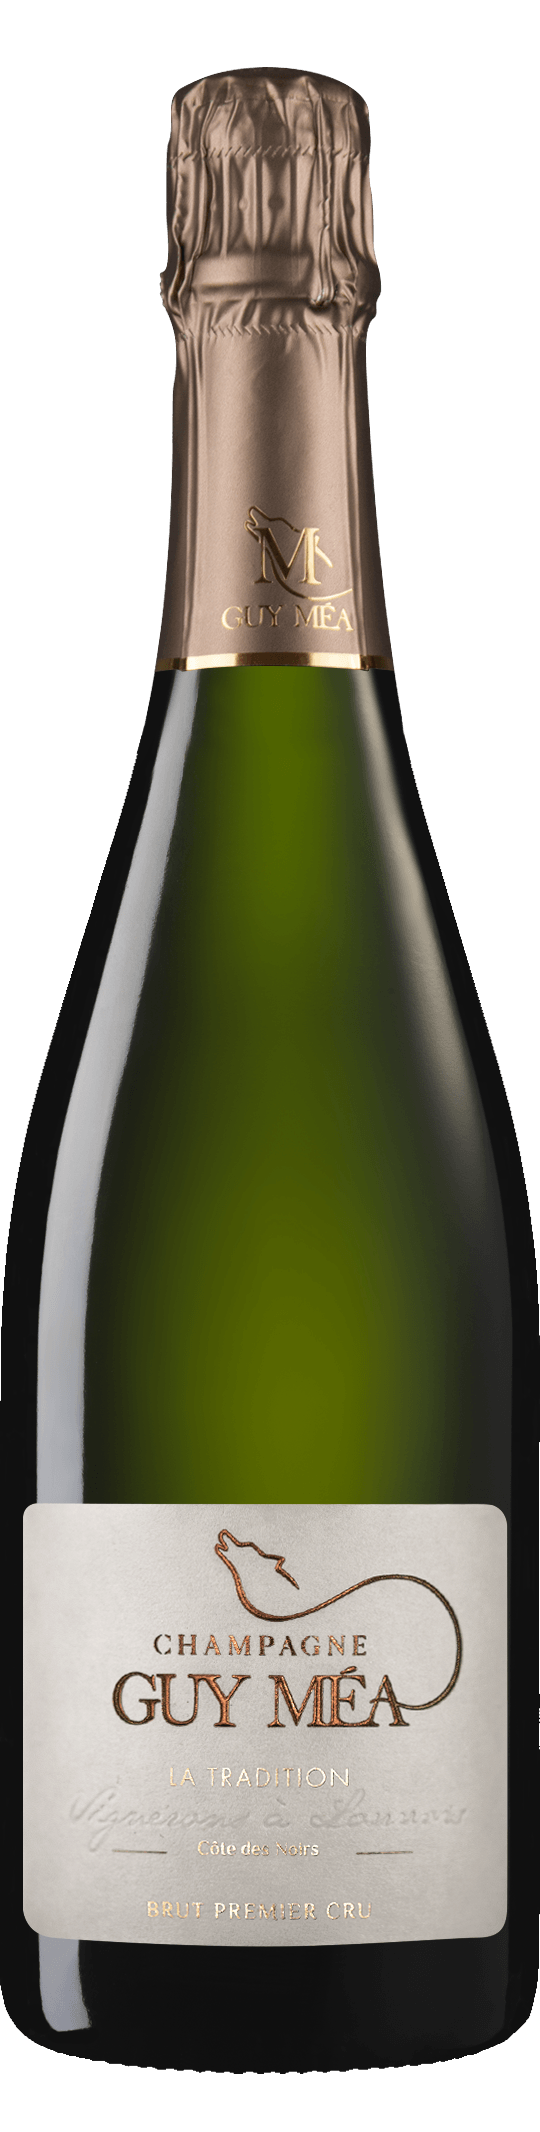 La Tradition / Assemblage - Champagne Guy Mea